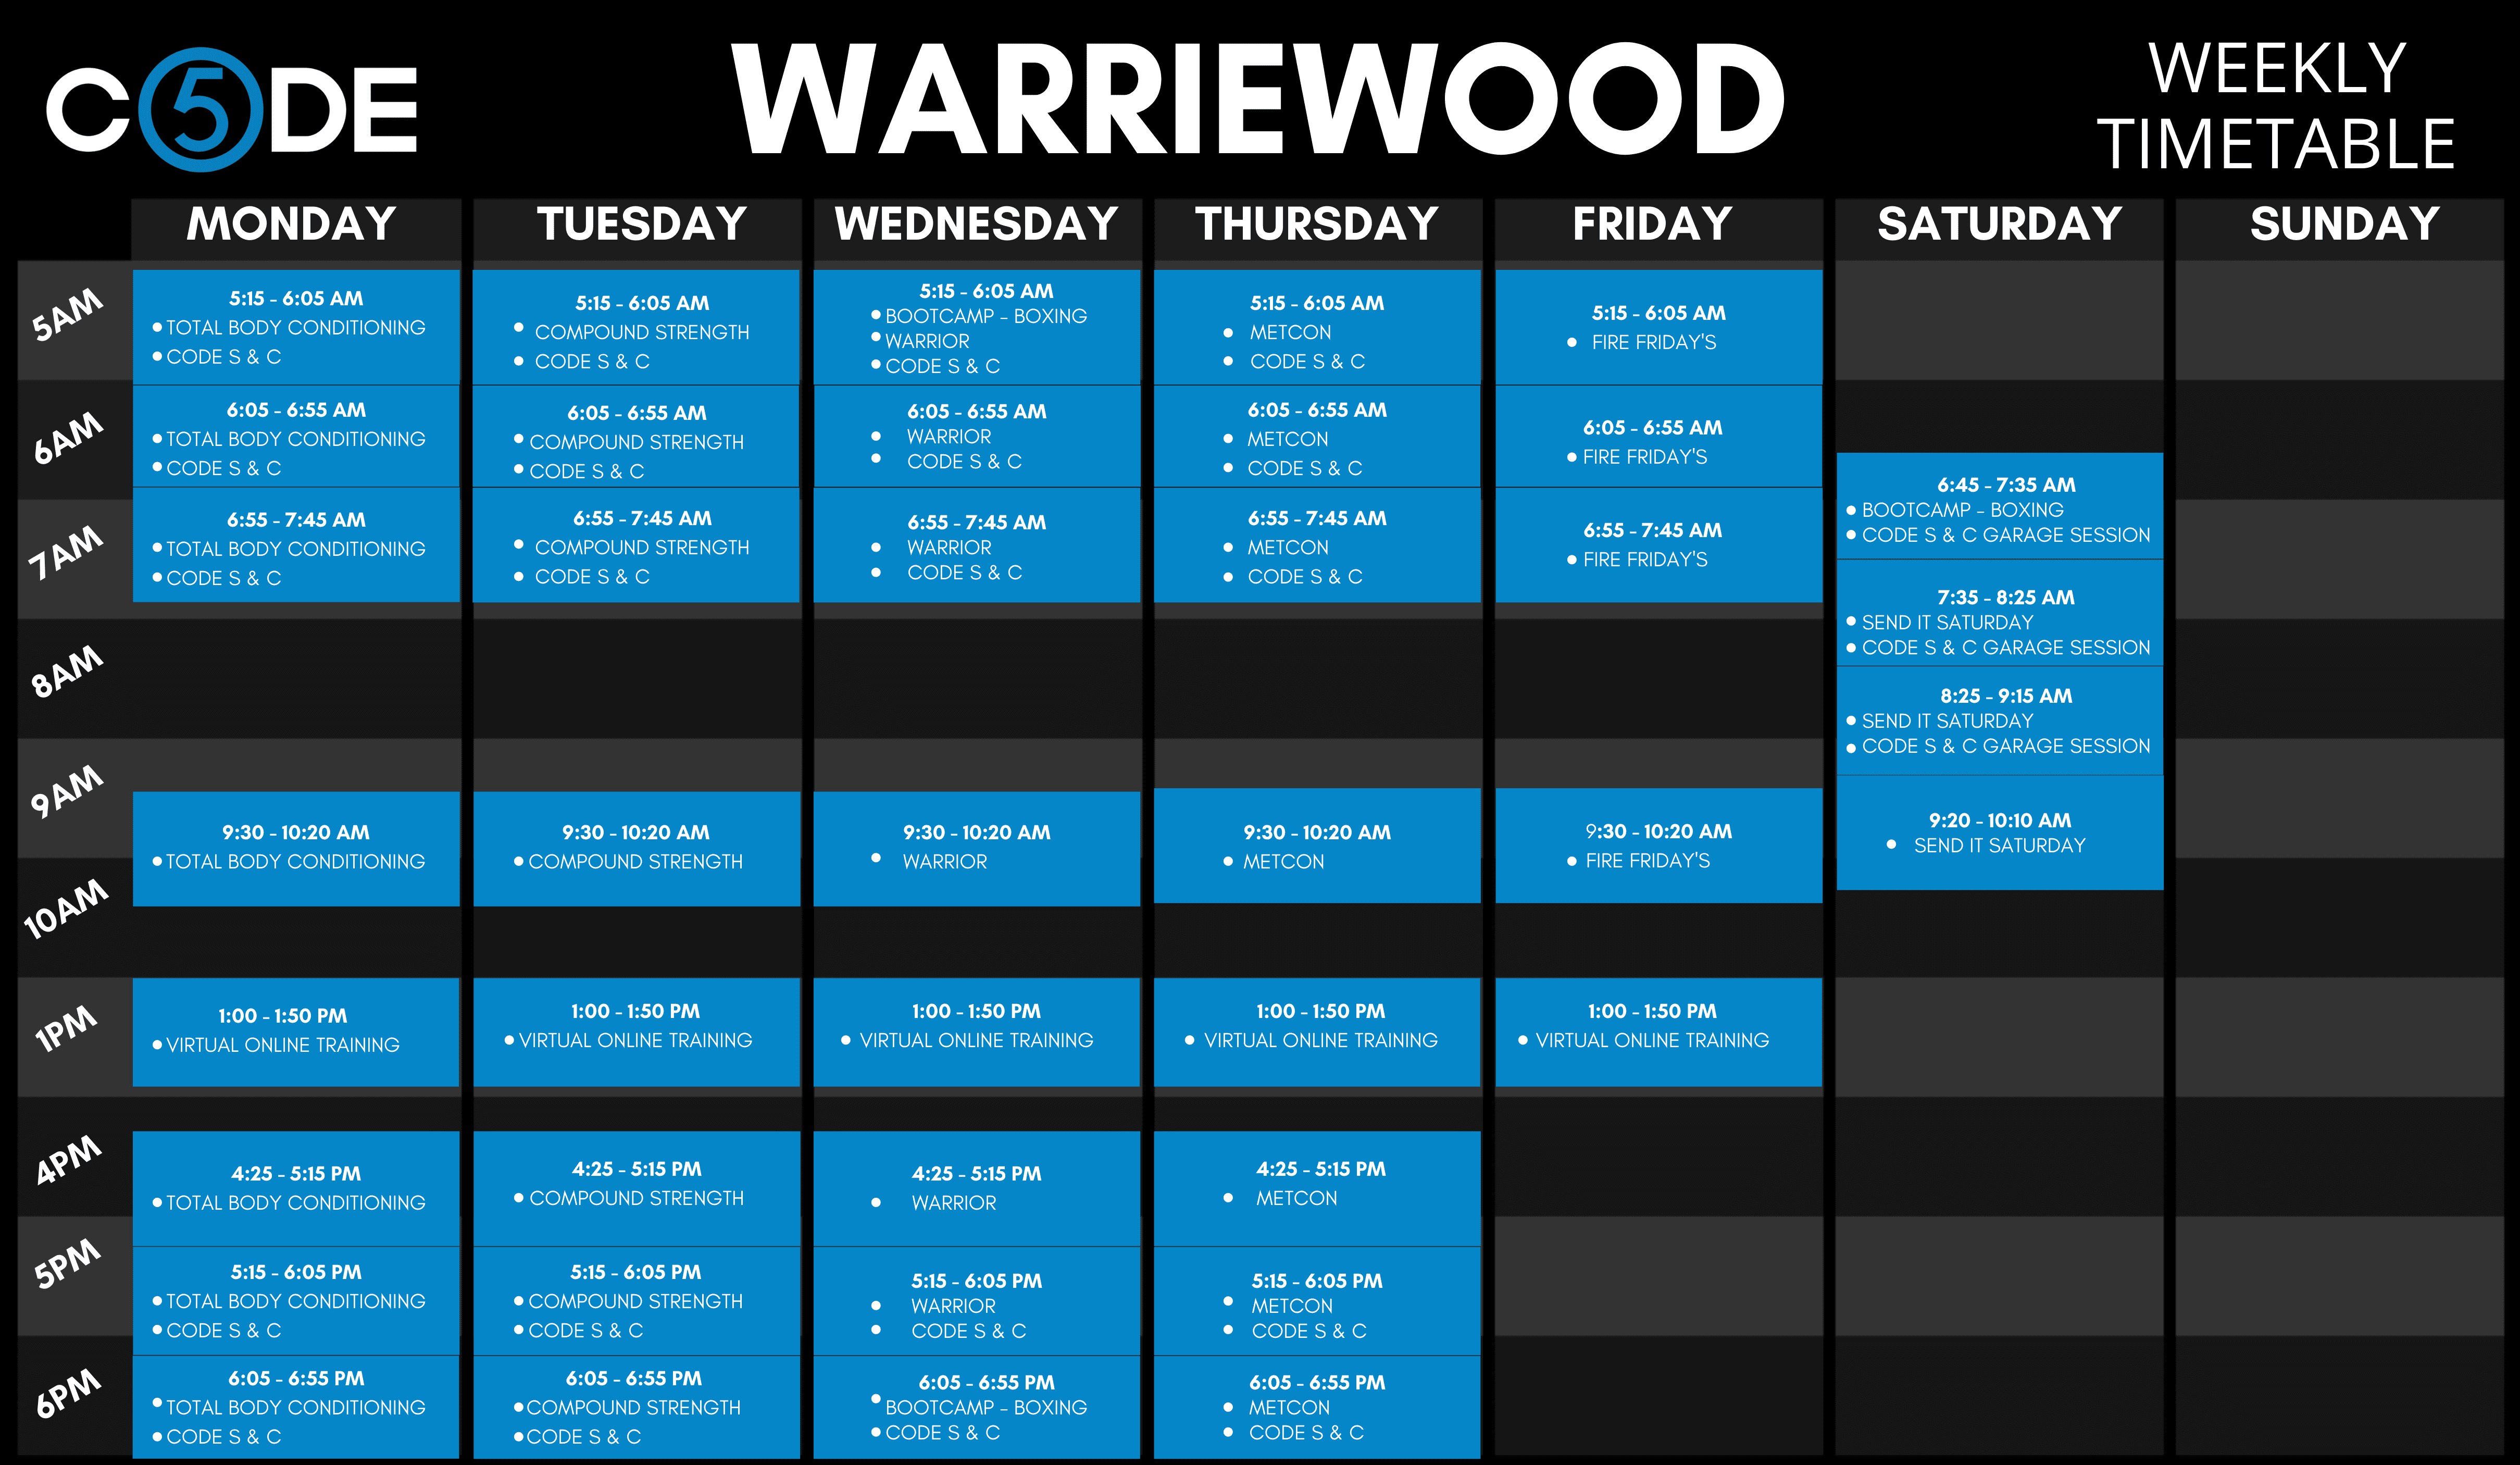 3 - Warriewood